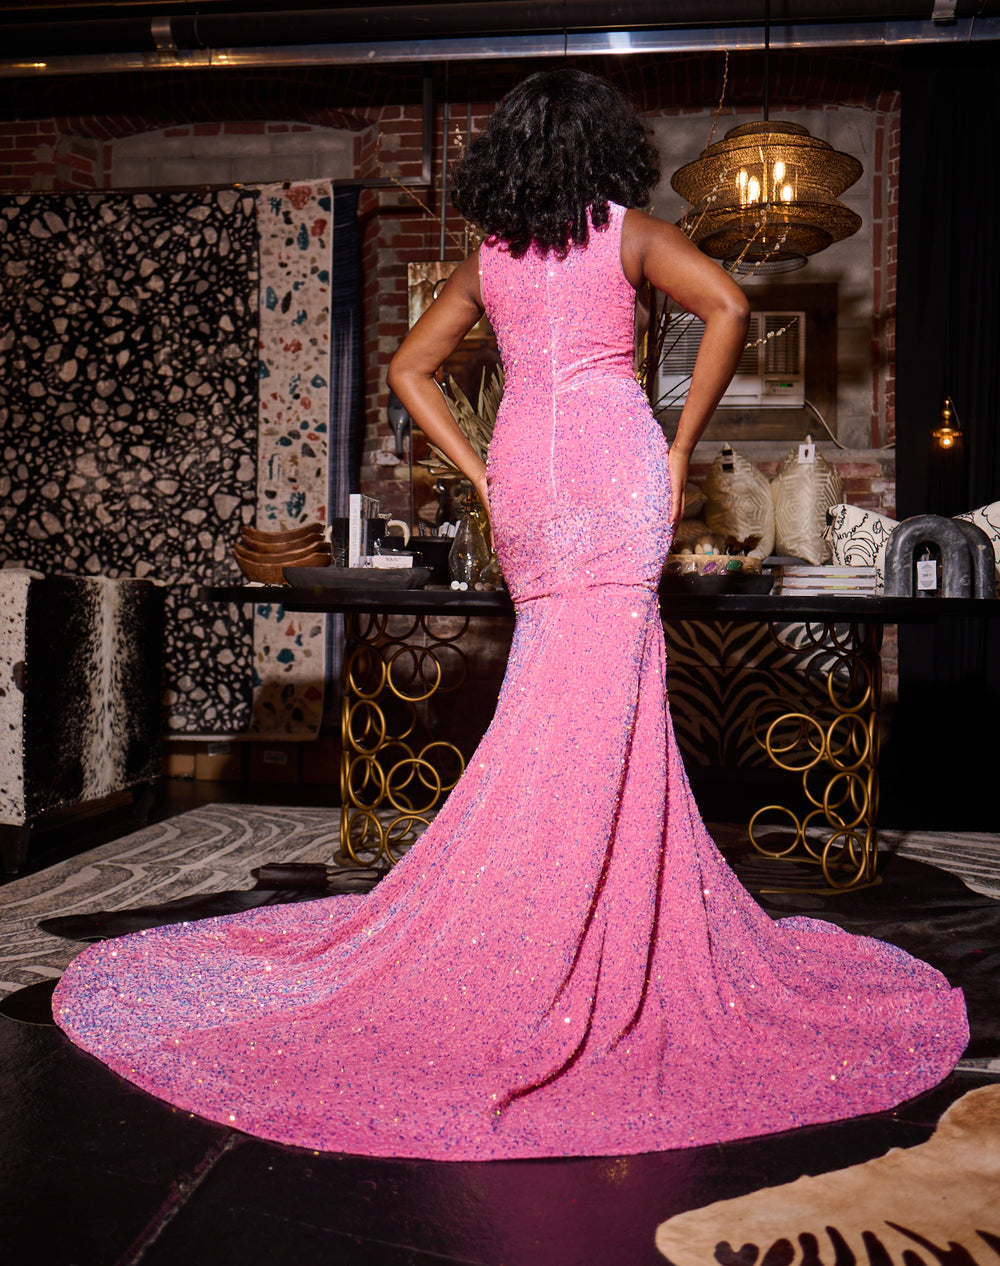 Pink Velvet Sequins Prom Dress With Gold Bodice Rhinestones.